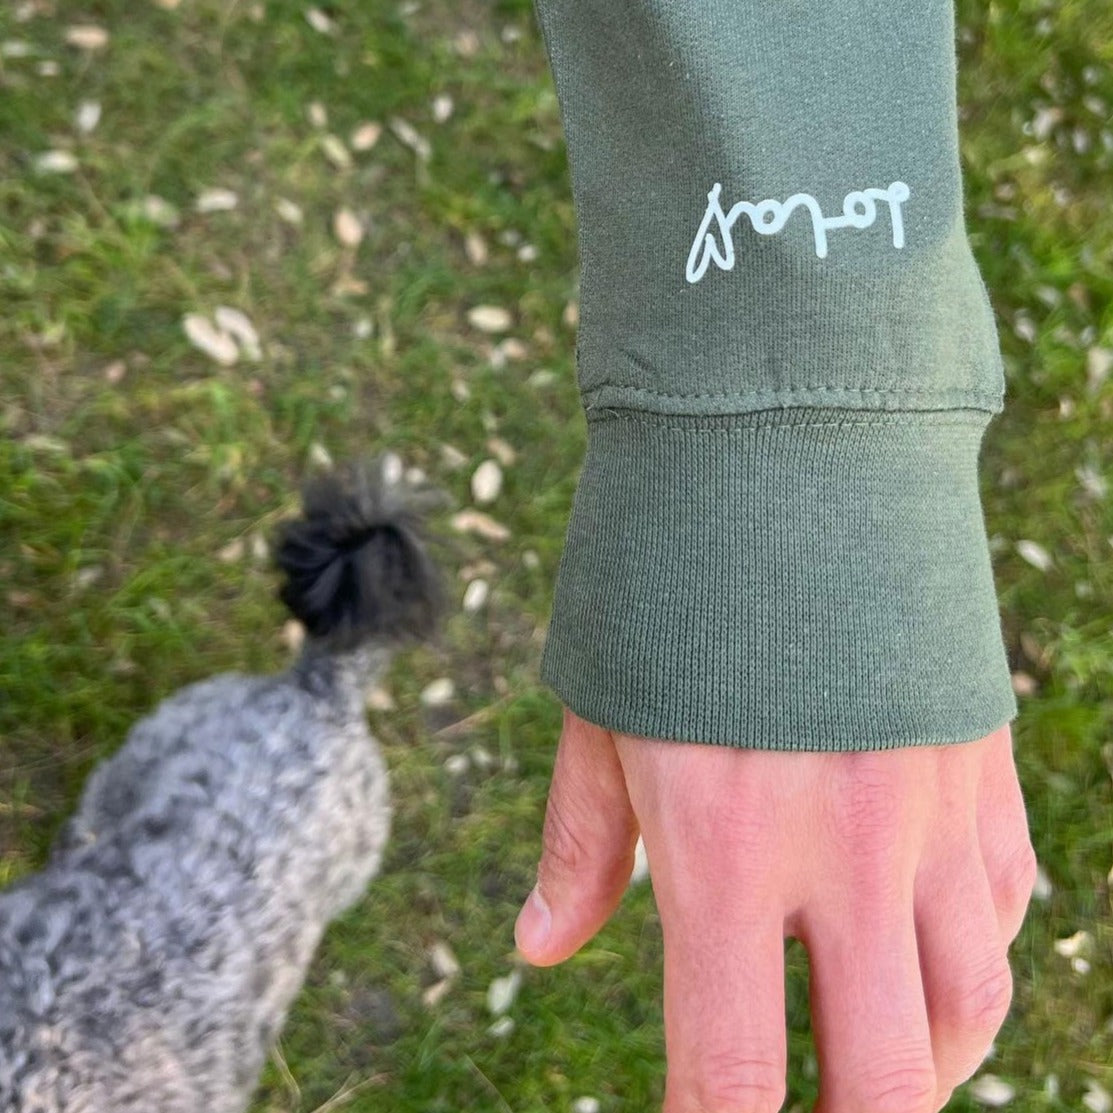 Personalised Dog Dad Sweatshirt